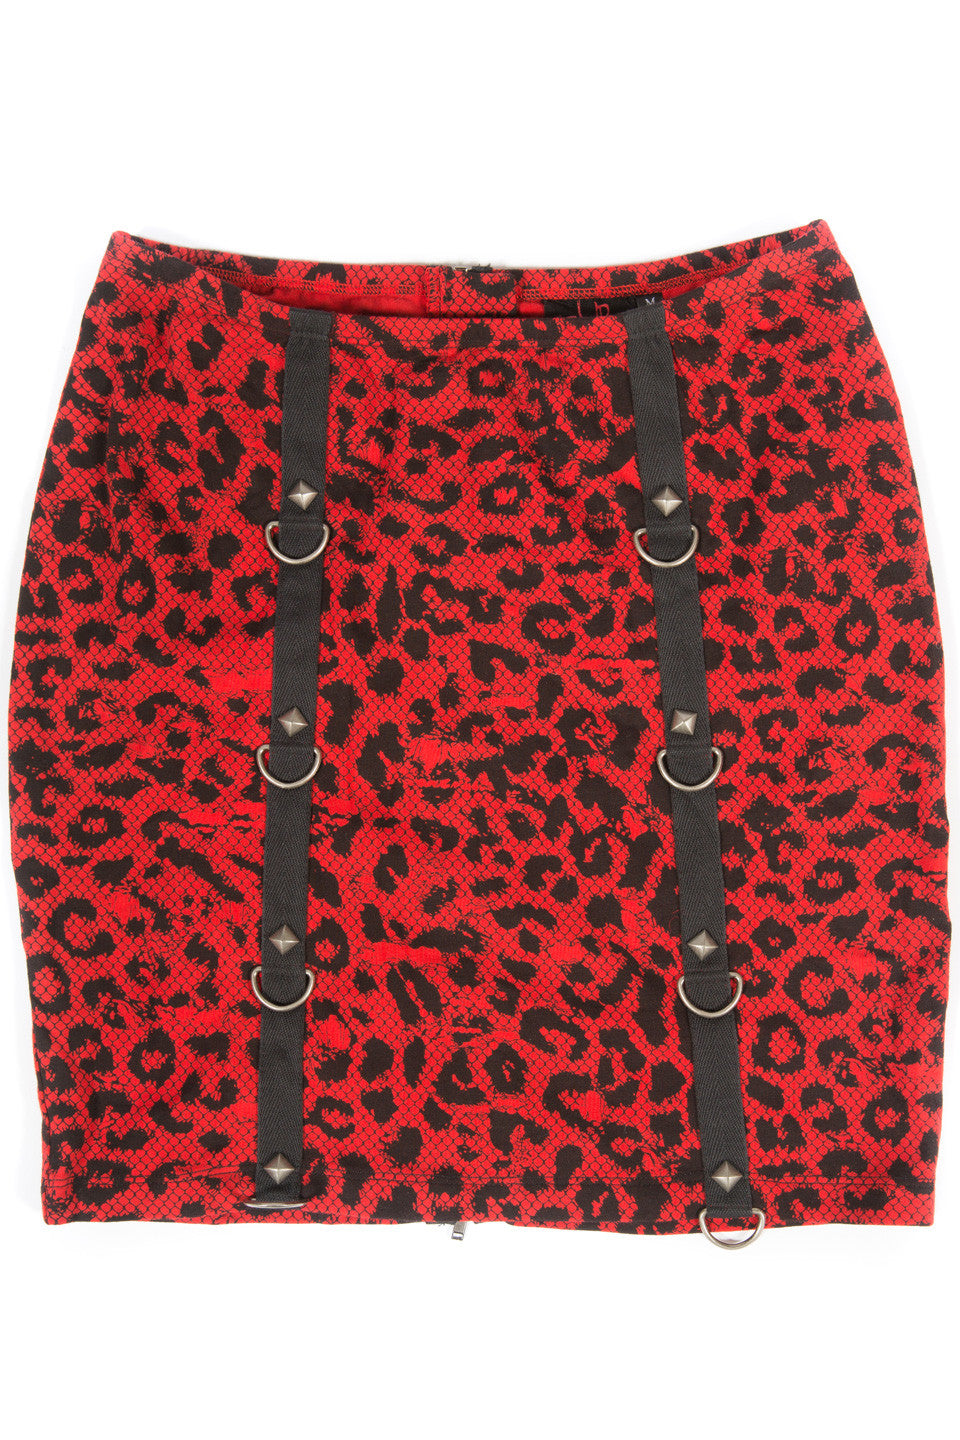 Vintage Leopard Pencil Skirt-Skirts-Lip Service